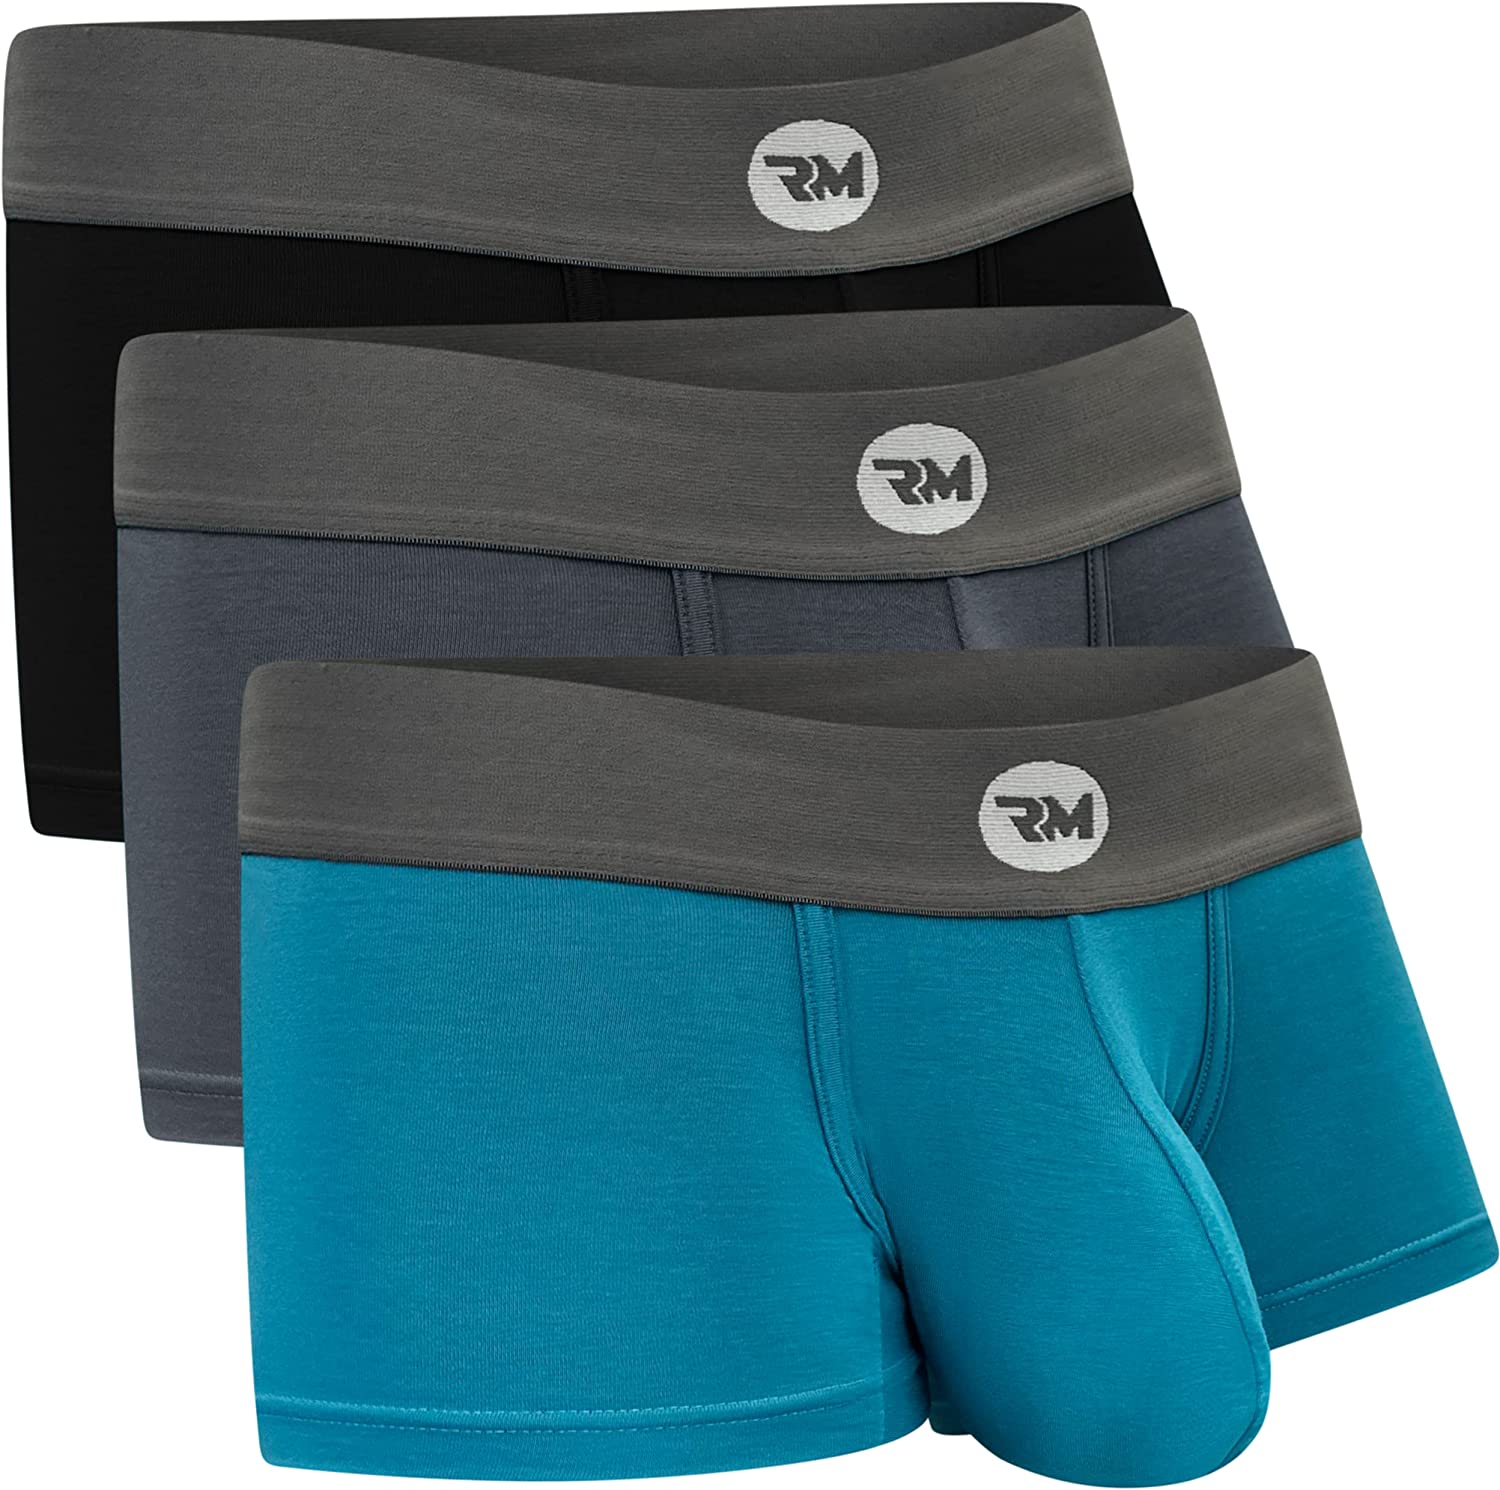 LOYEJGL 3Pack Men Underwear Cup Bulge Enlarge Enhancing Sponge Pad Swimwear  Padded for Swimming Boxers Briefs G String Thongs Shorts.